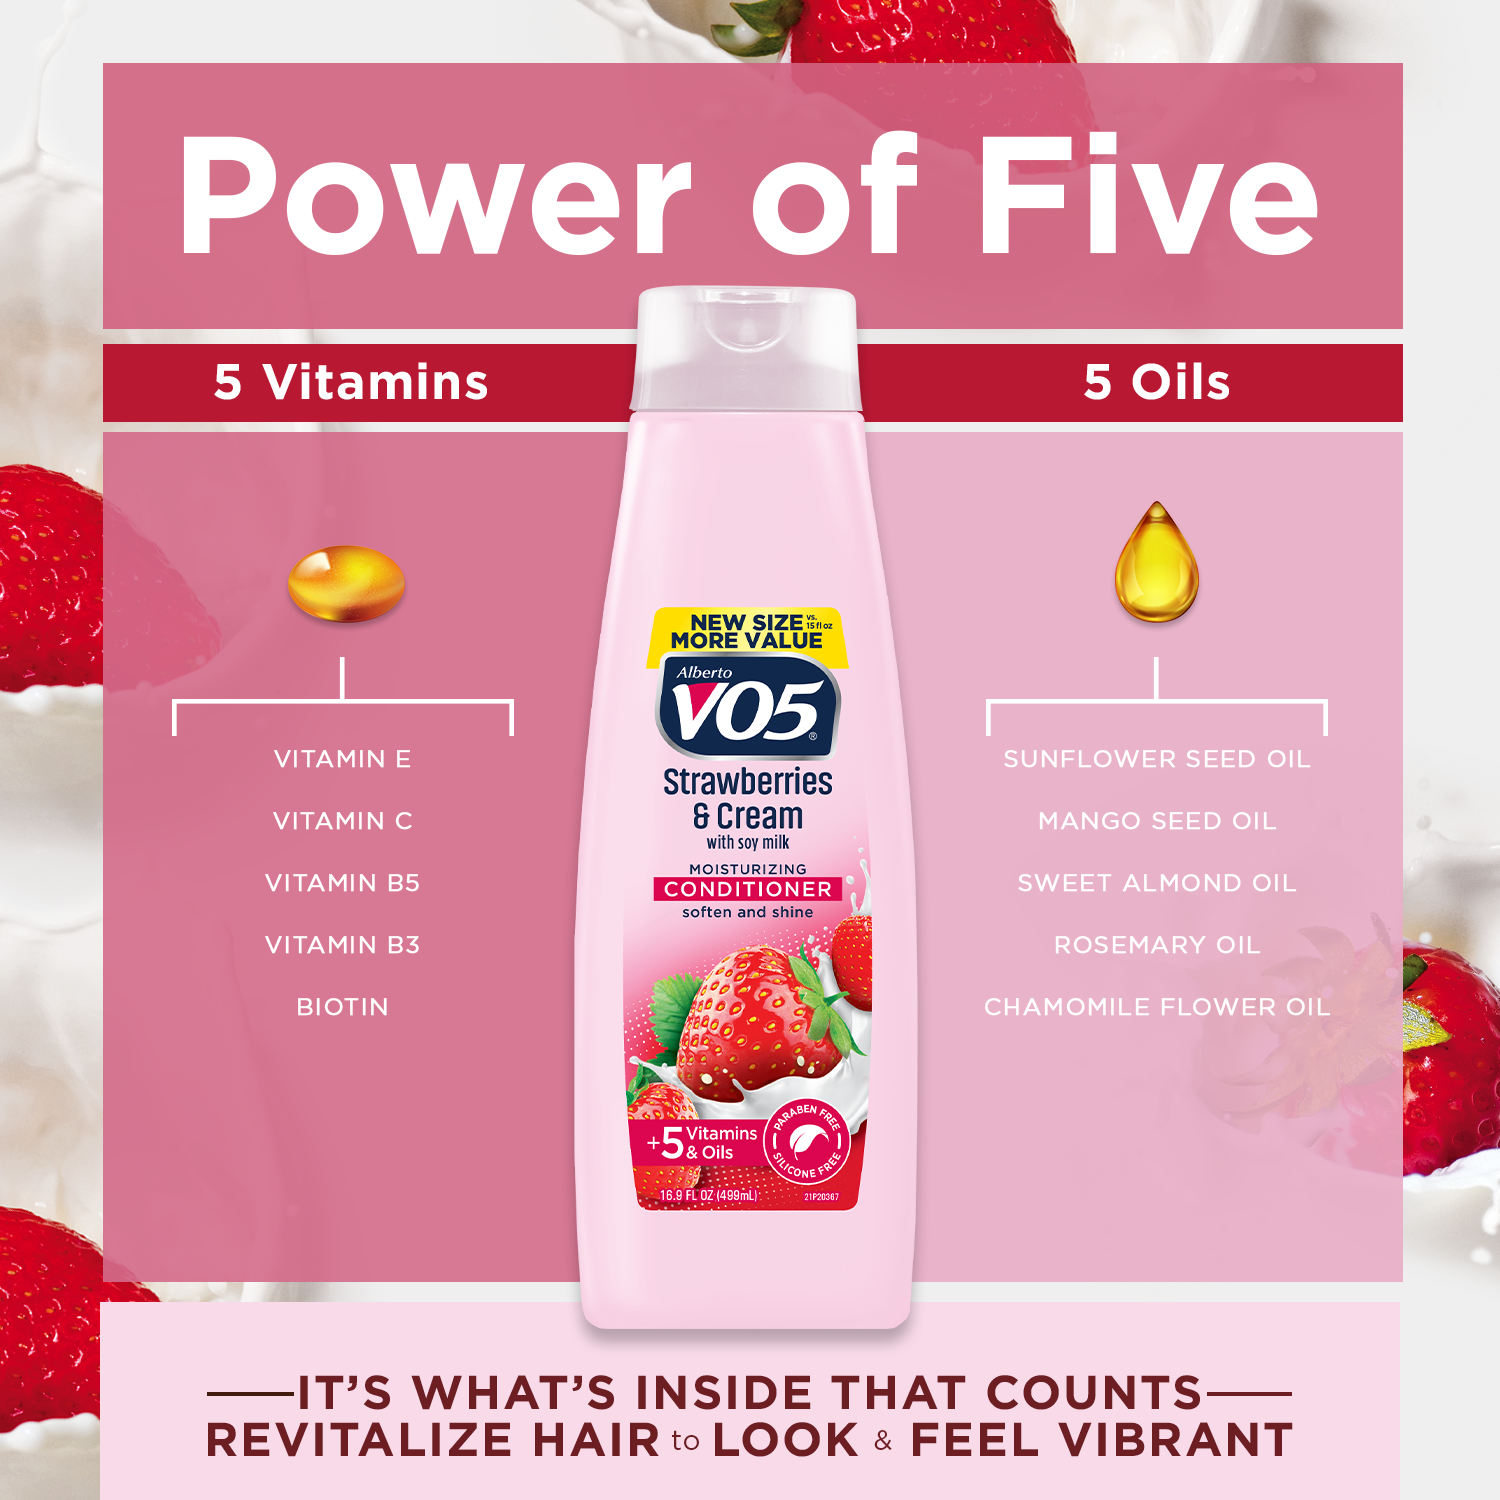 Alberto VO5 Strawberries & Cream Moisturizing Conditioner, for All Hair Types, 16.9 fl oz - image 4 of 6